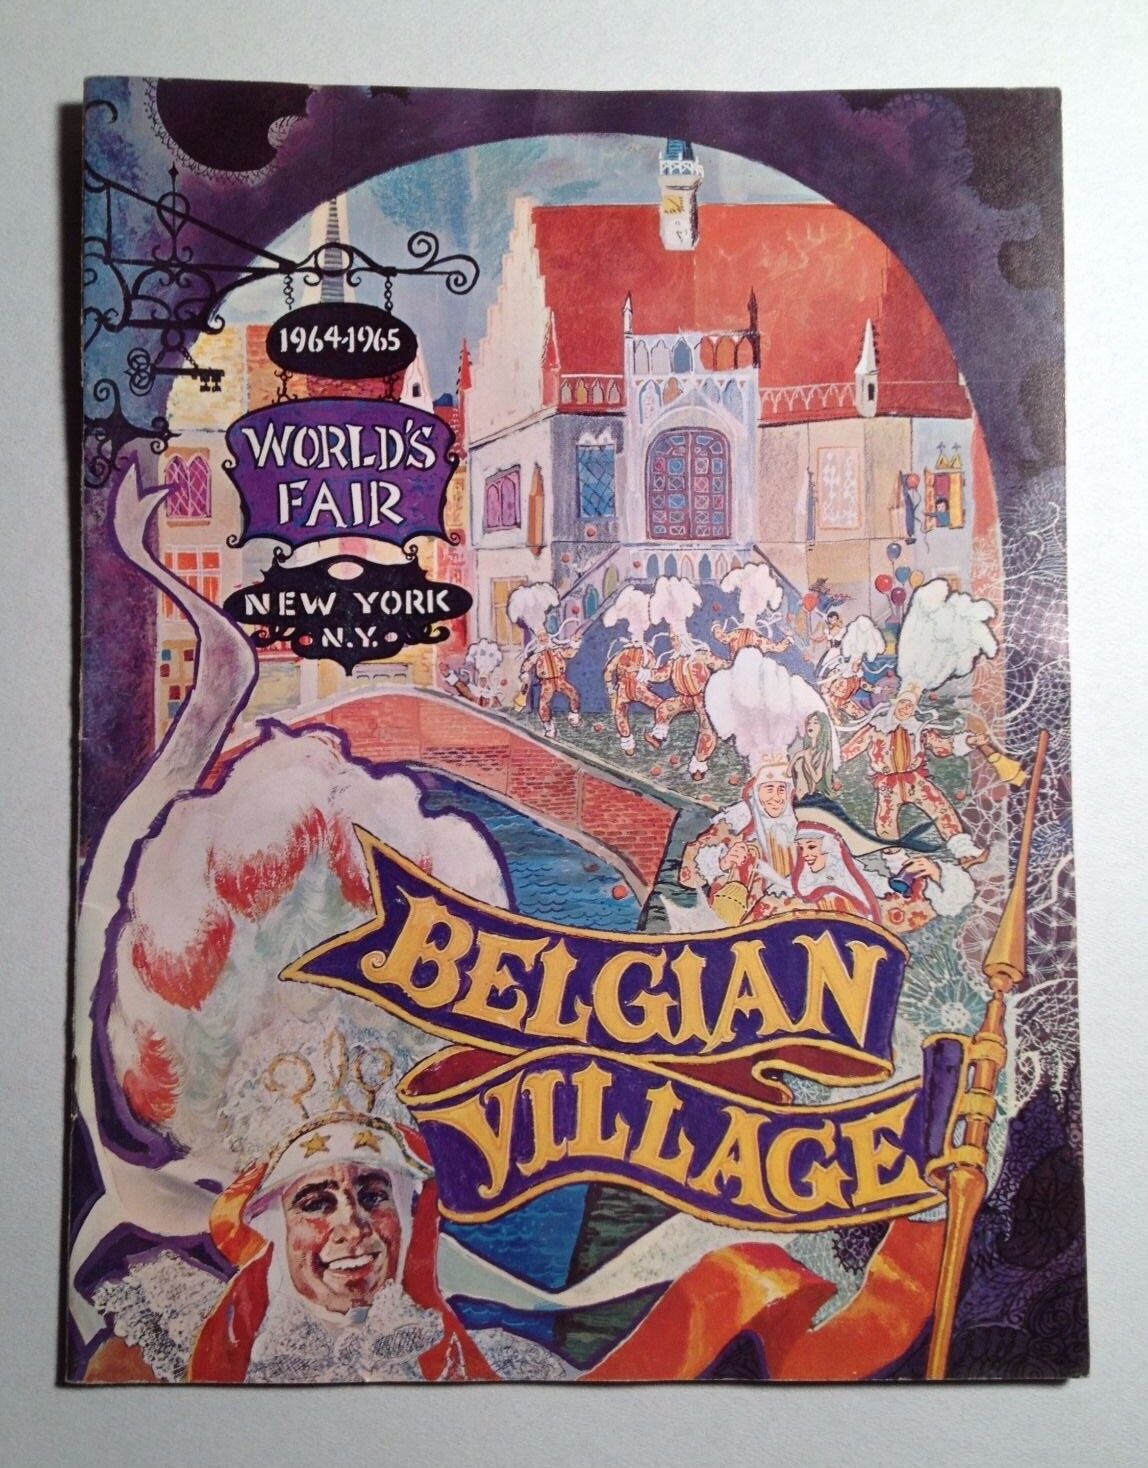 1964-1965 New York World's Fair Original Belgian Village Guide 